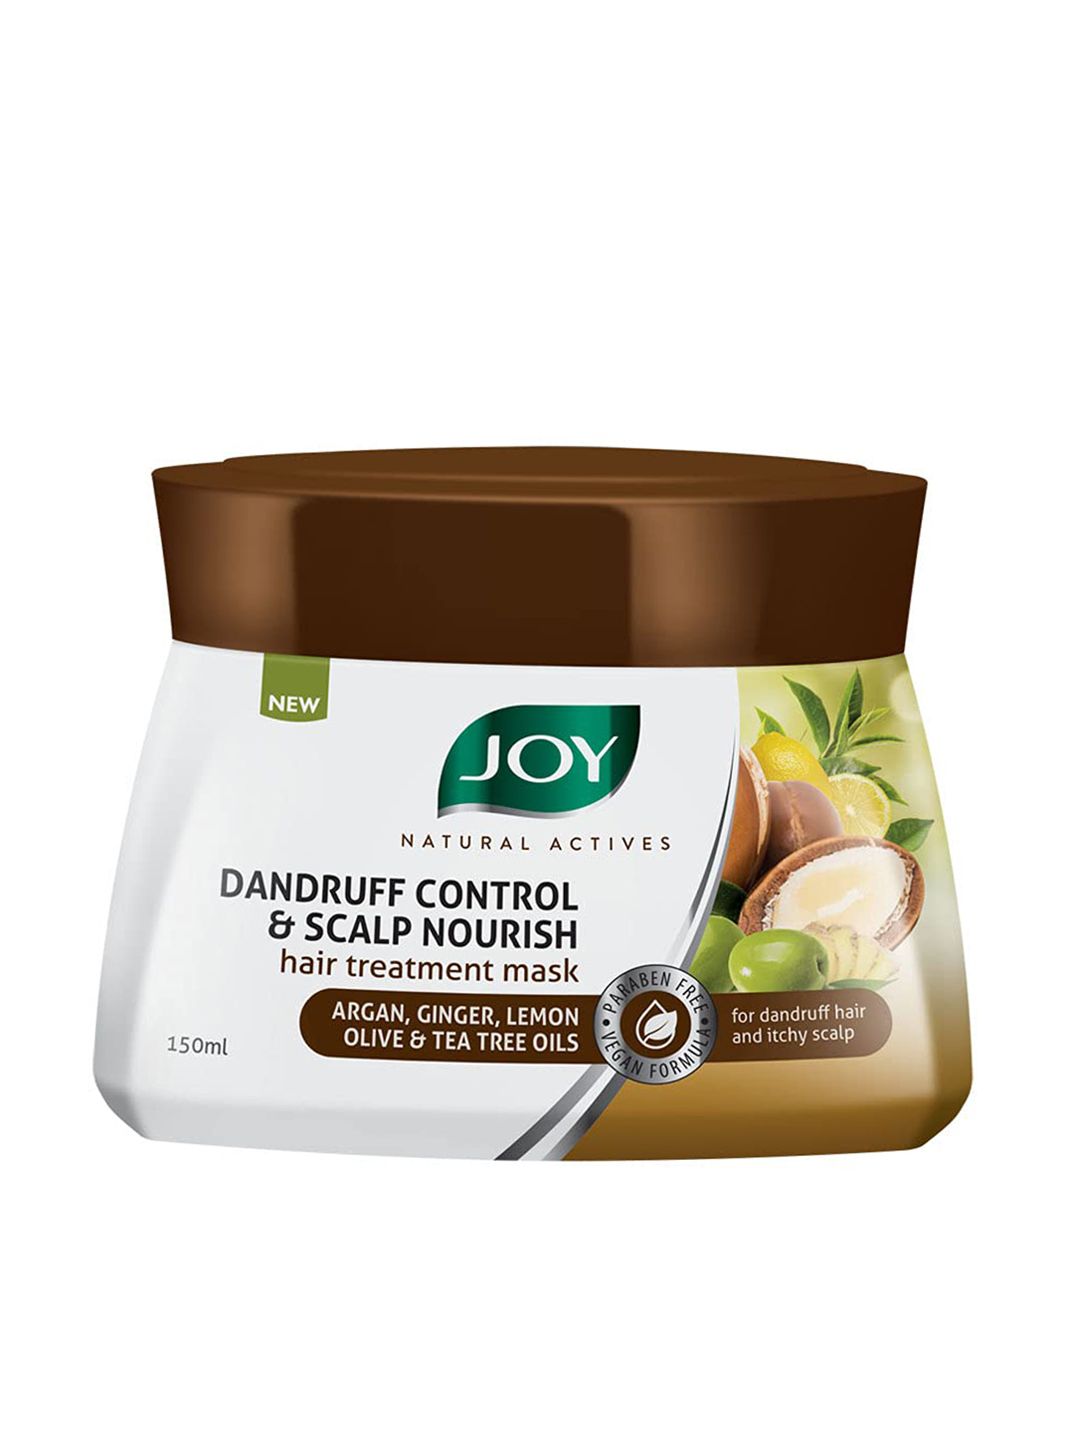 JOY Natural Actives Dandruff Control & Scalp Nourish Hair Treatment Mask 150 ml Price in India